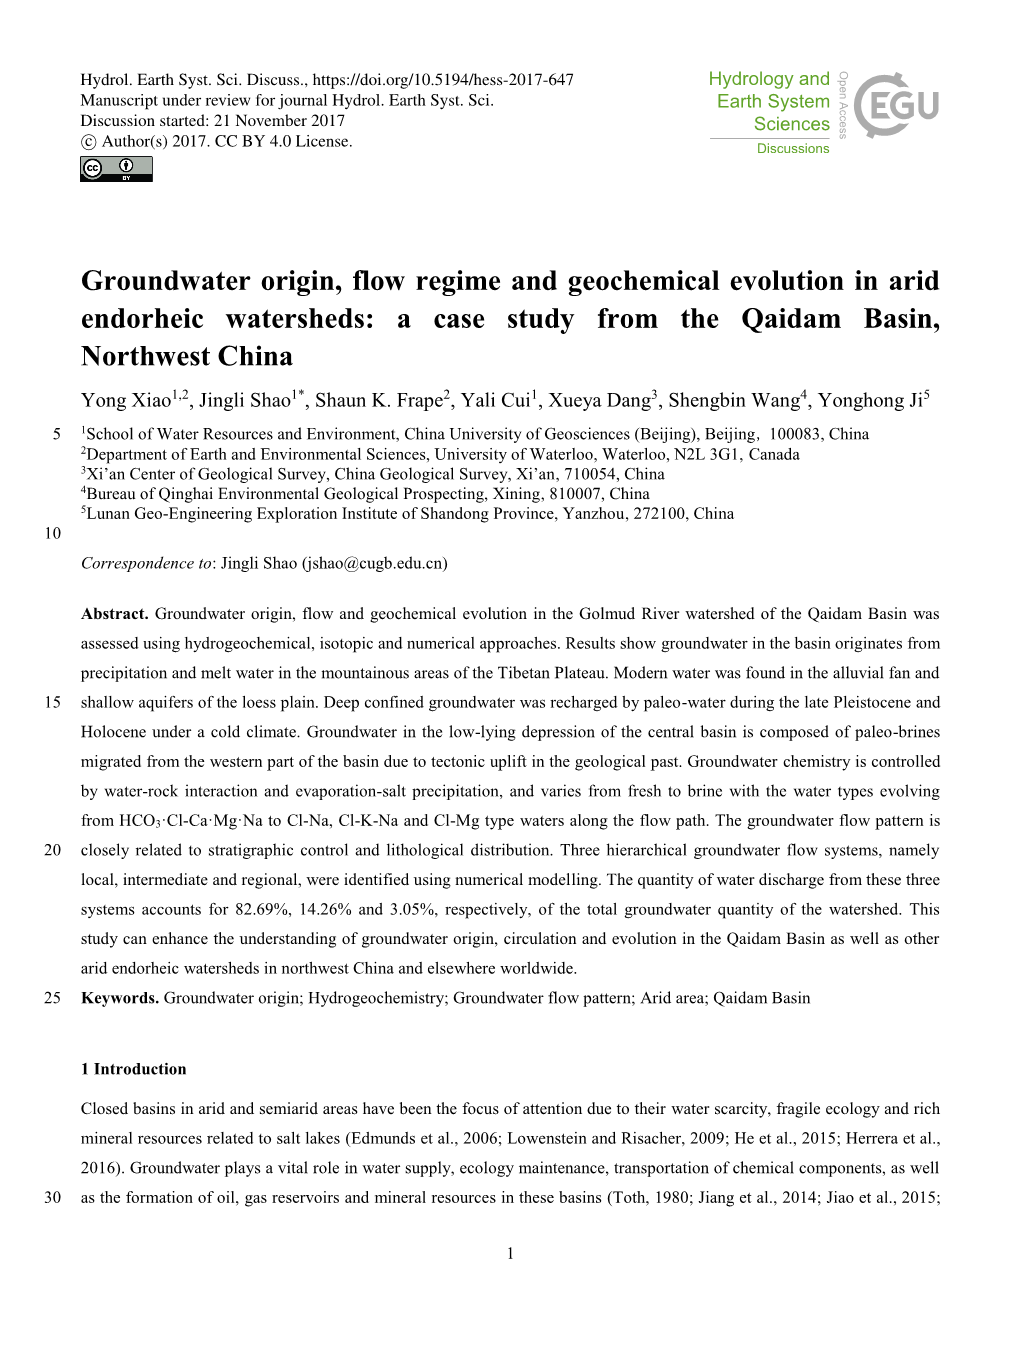 Groundwater Origin, Flow Regime and Geochemical Evolution in Arid